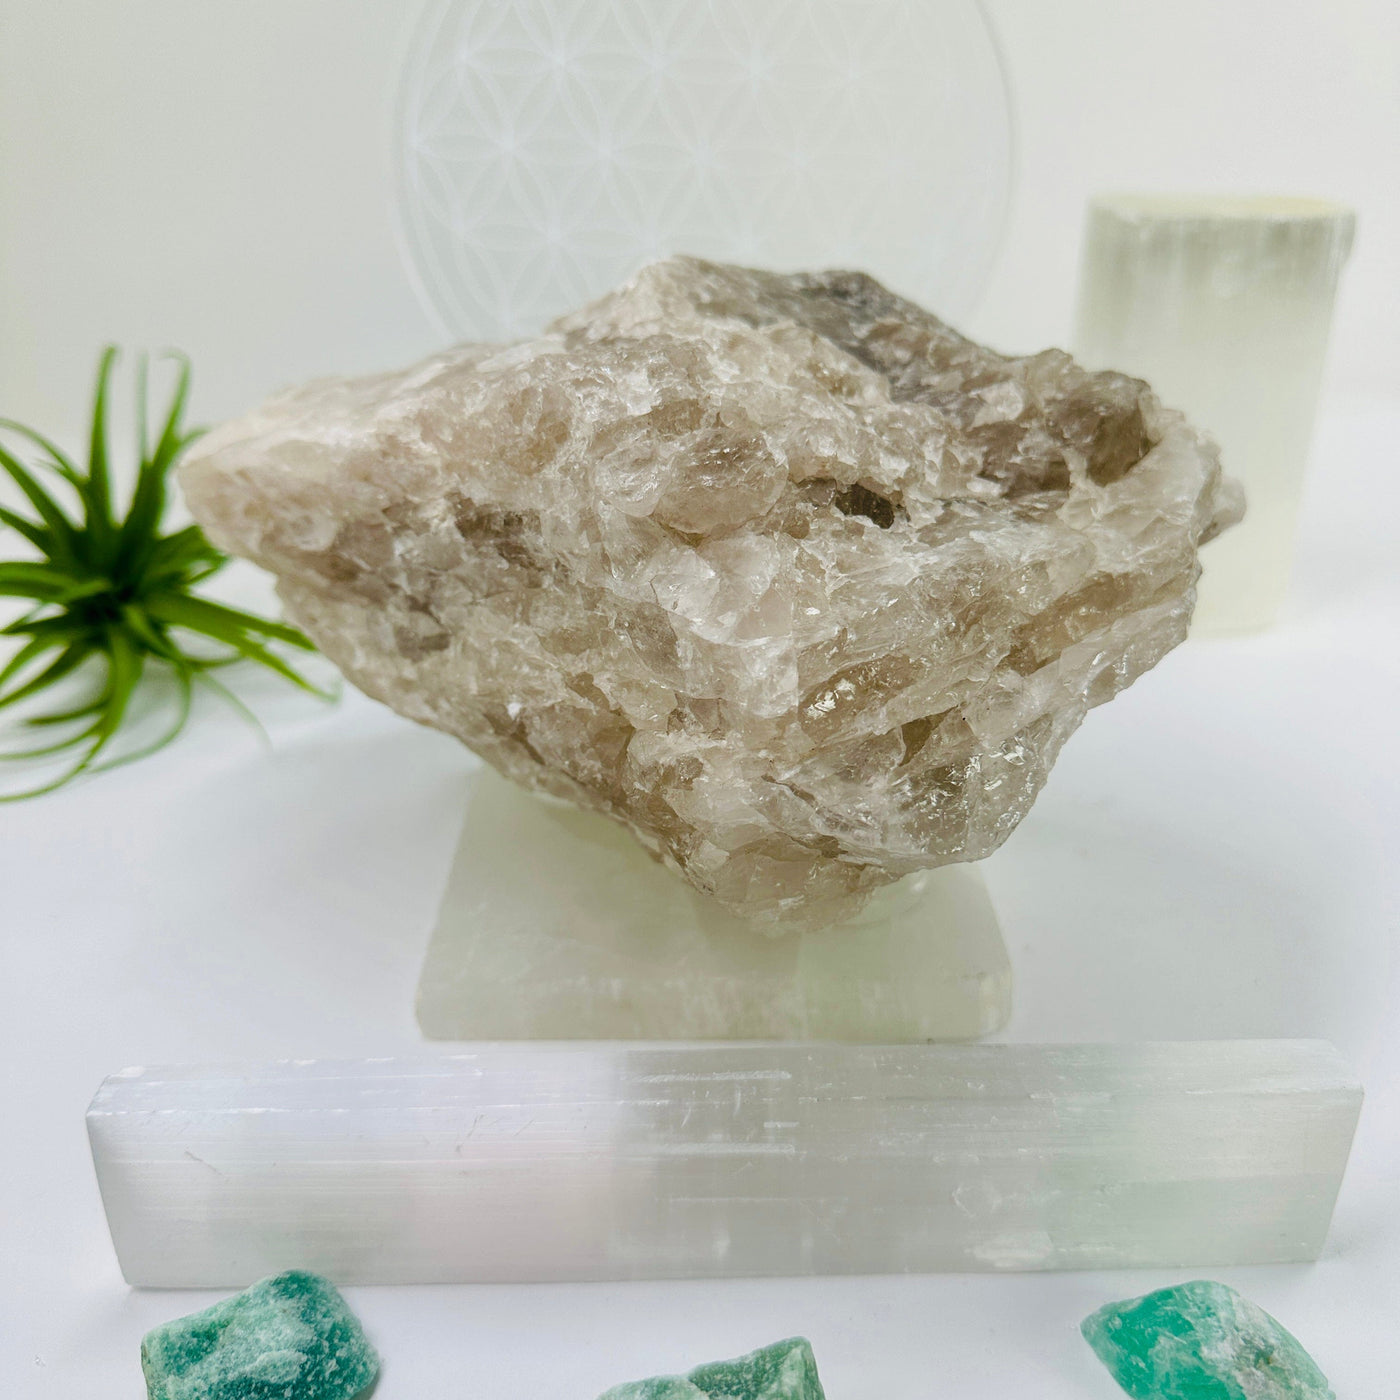  Aquamarine in matrix - aquamarine crystal diagonally embedded in natural rough stone back view